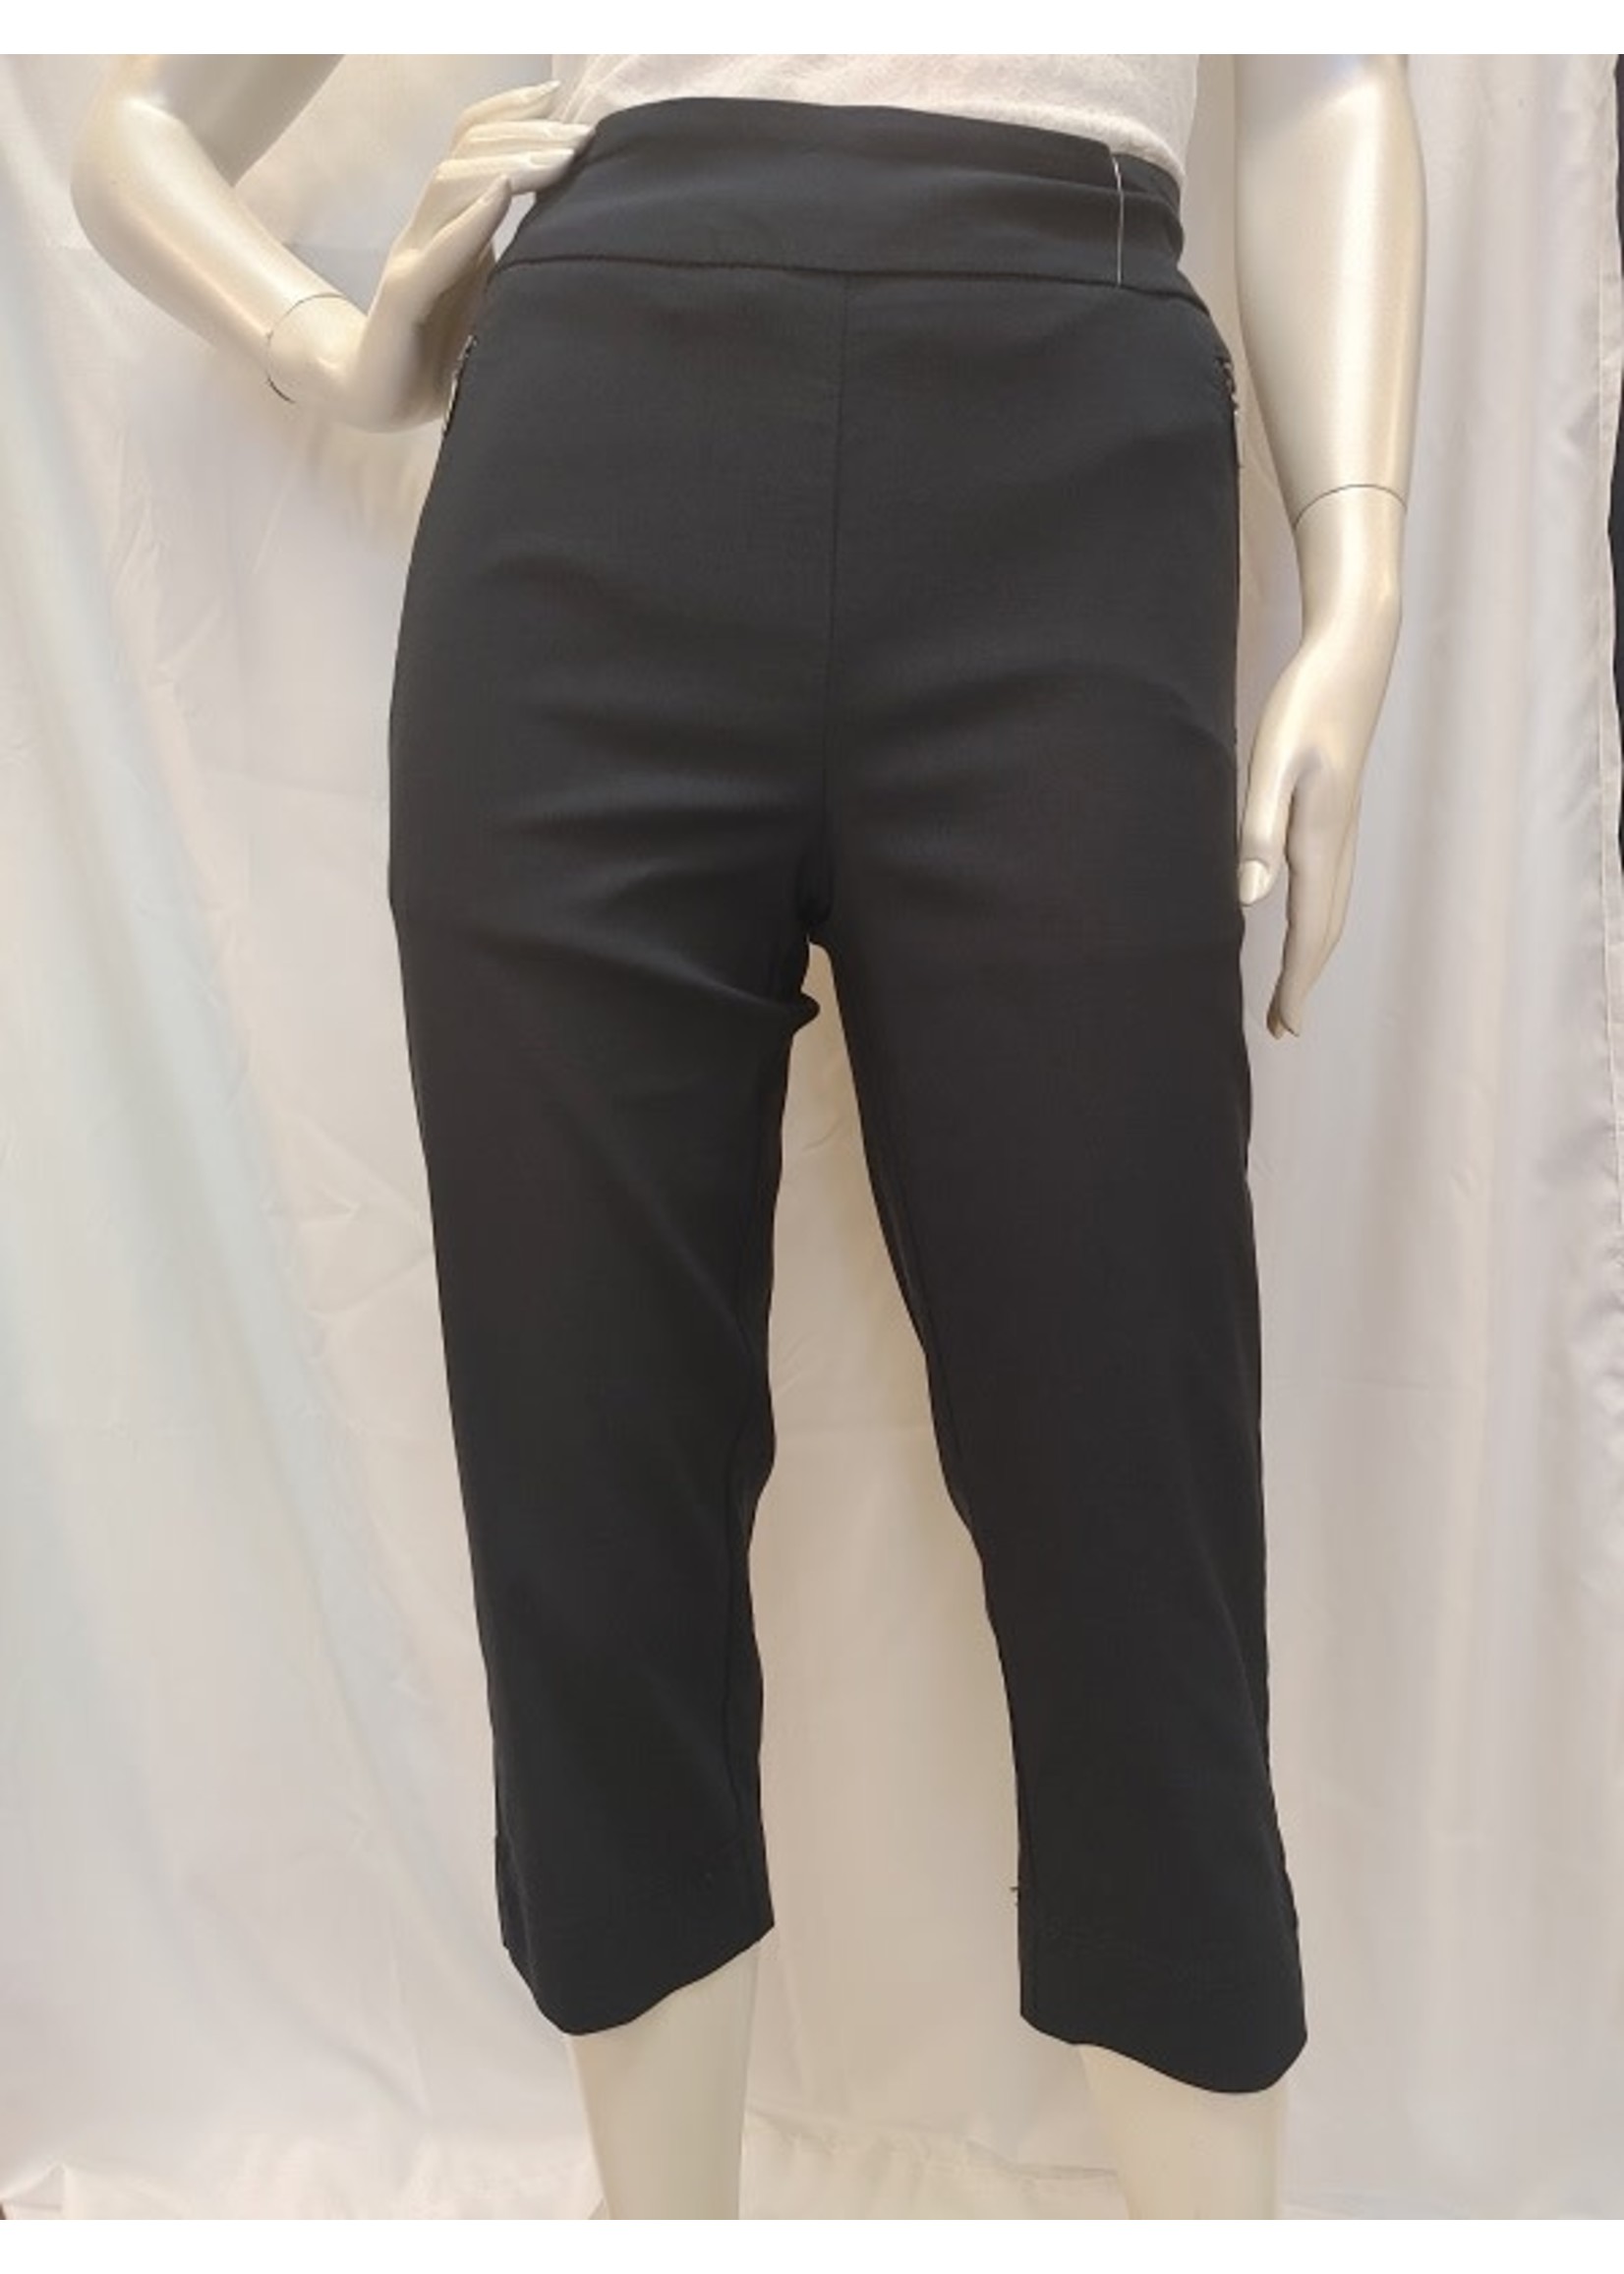 DKR & Co Capri with zipper pockets